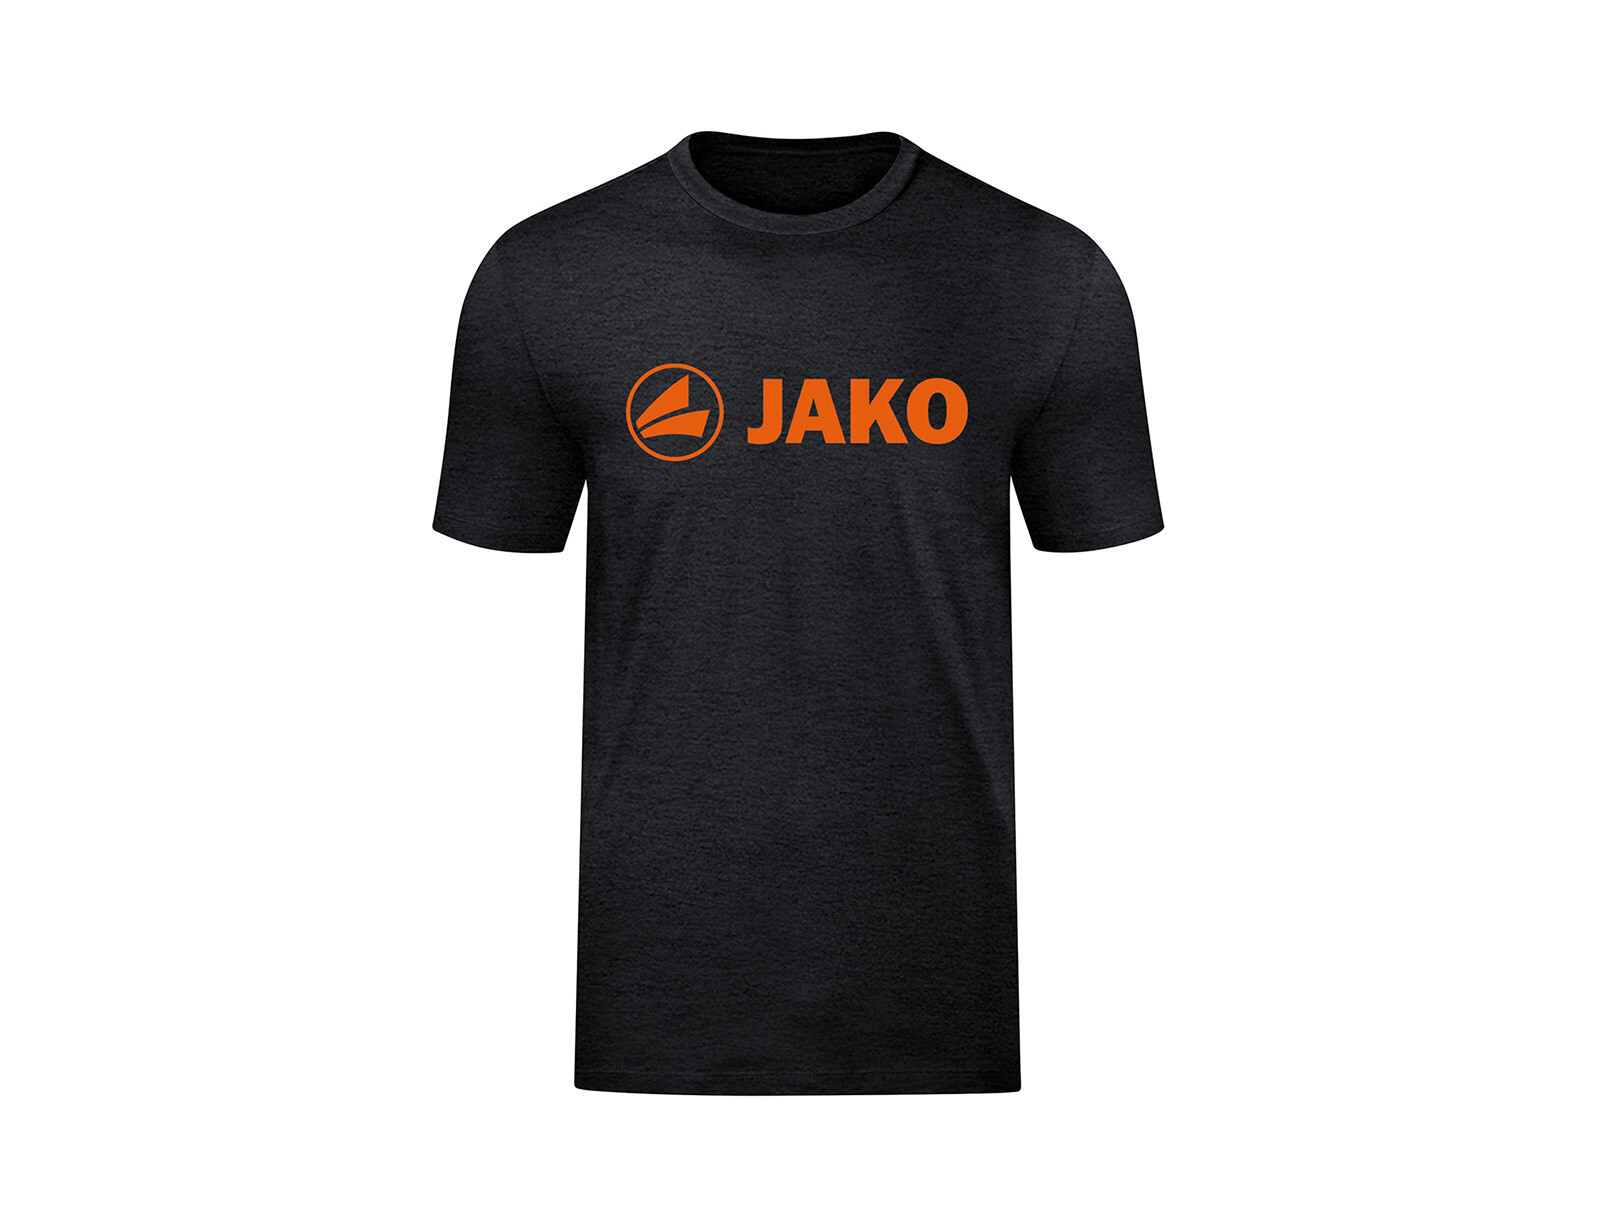 Jako - T-shirt Promo - Zwart Oranje T-shirt Kids